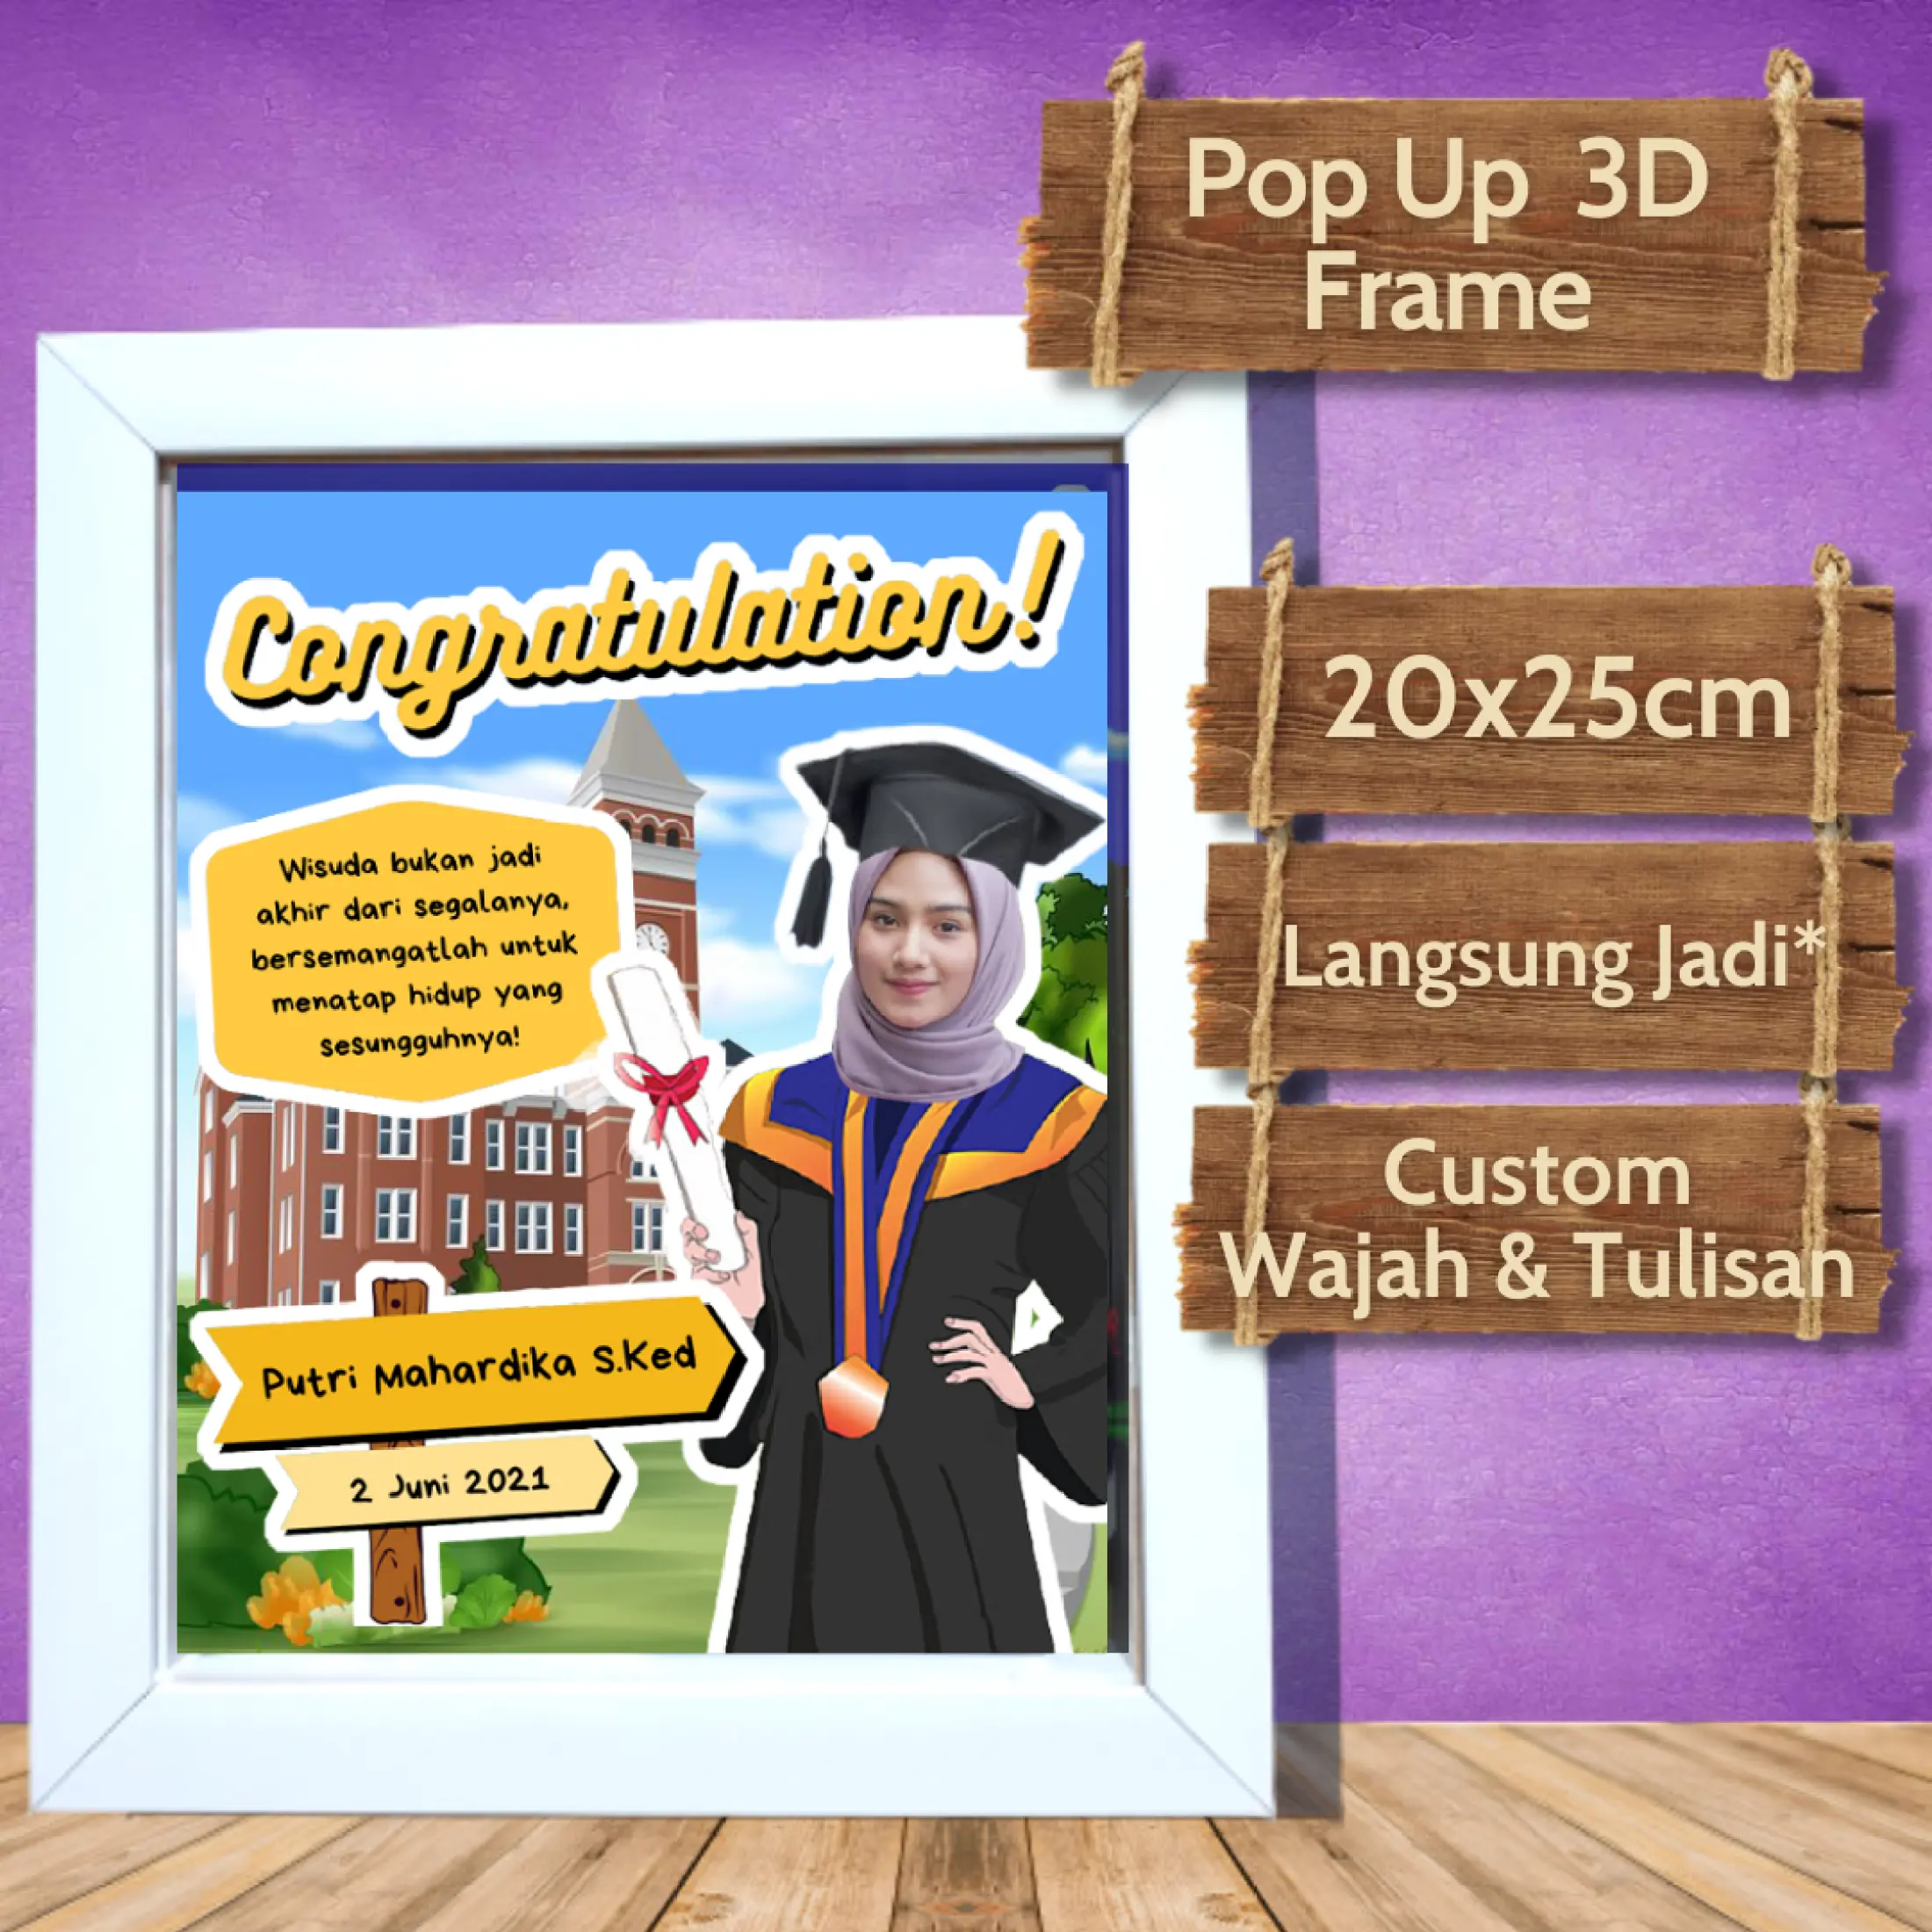 CUSTOM Foto 8R Pop Up 3D Hadiah Wisuda Scrapbook Murah Kado Graduation Gift Karikatur Frame Pigura Congratulation 2021 Lazada Indonesia